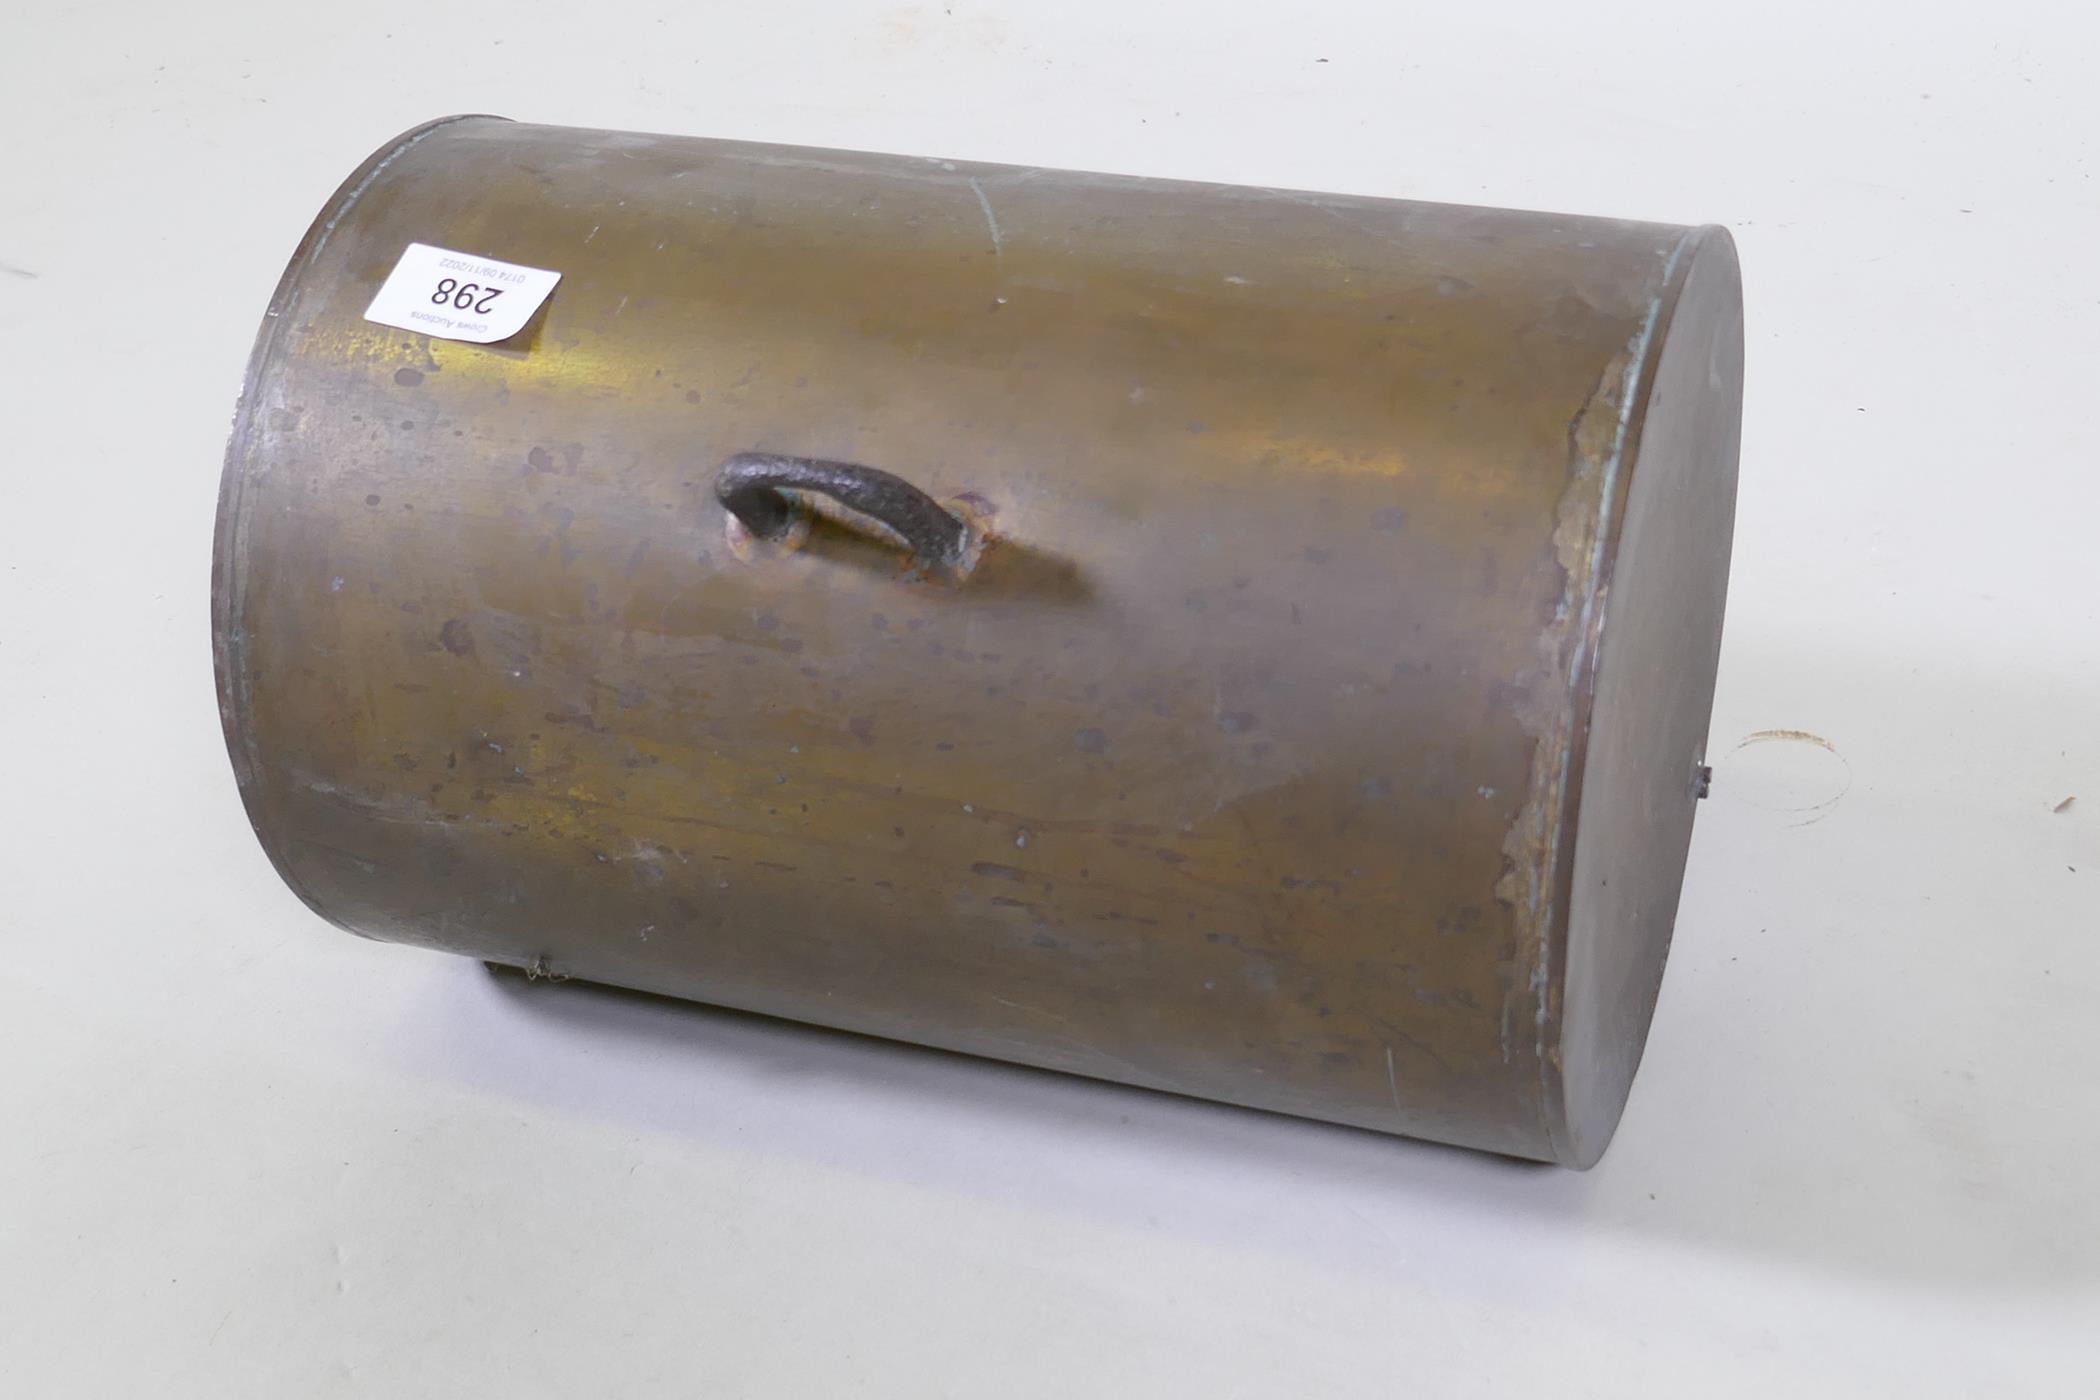 Antique brass buoy, 30 x 20cm